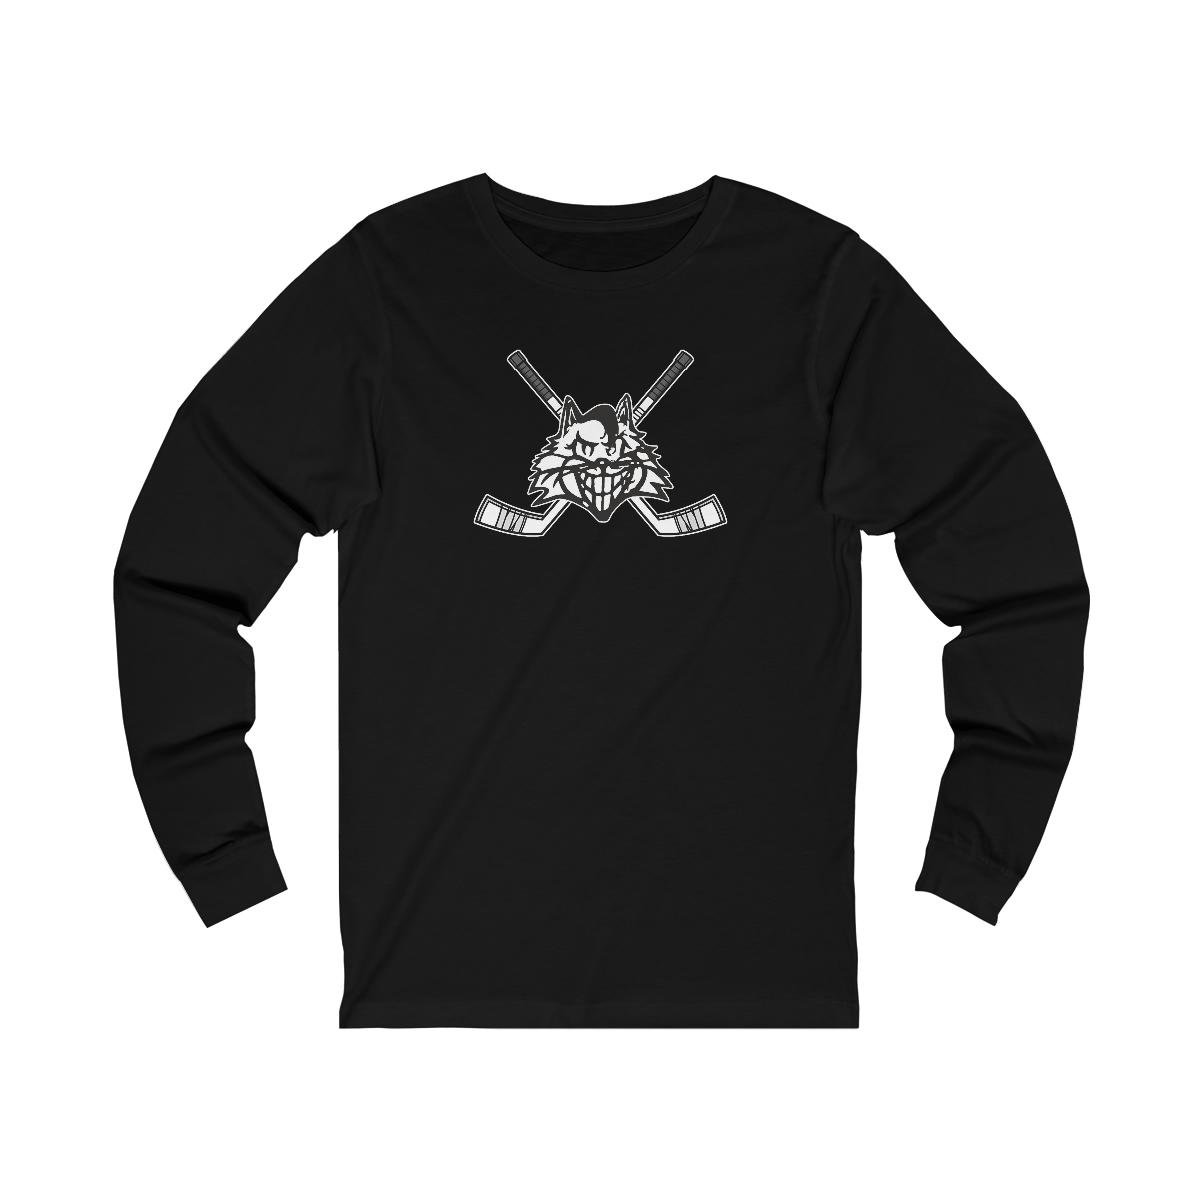 Slamcat – Cross Sticks Long Sleeve Tshirt